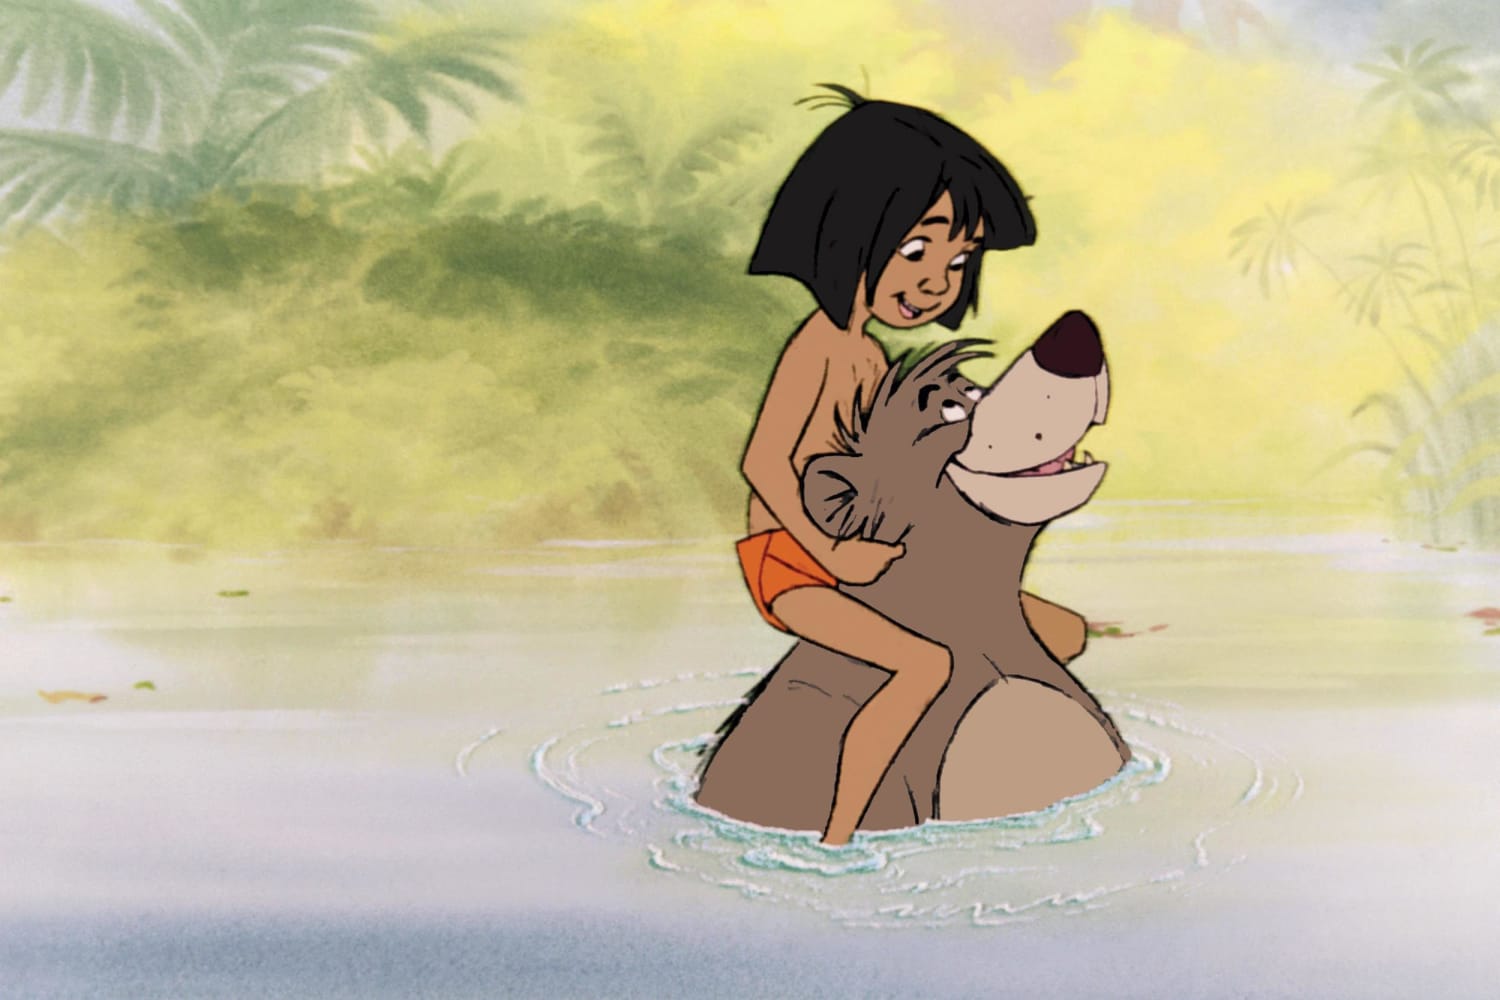 Disney's 'Jungle Book' Gets Sinister Makeover in New Film Trailer